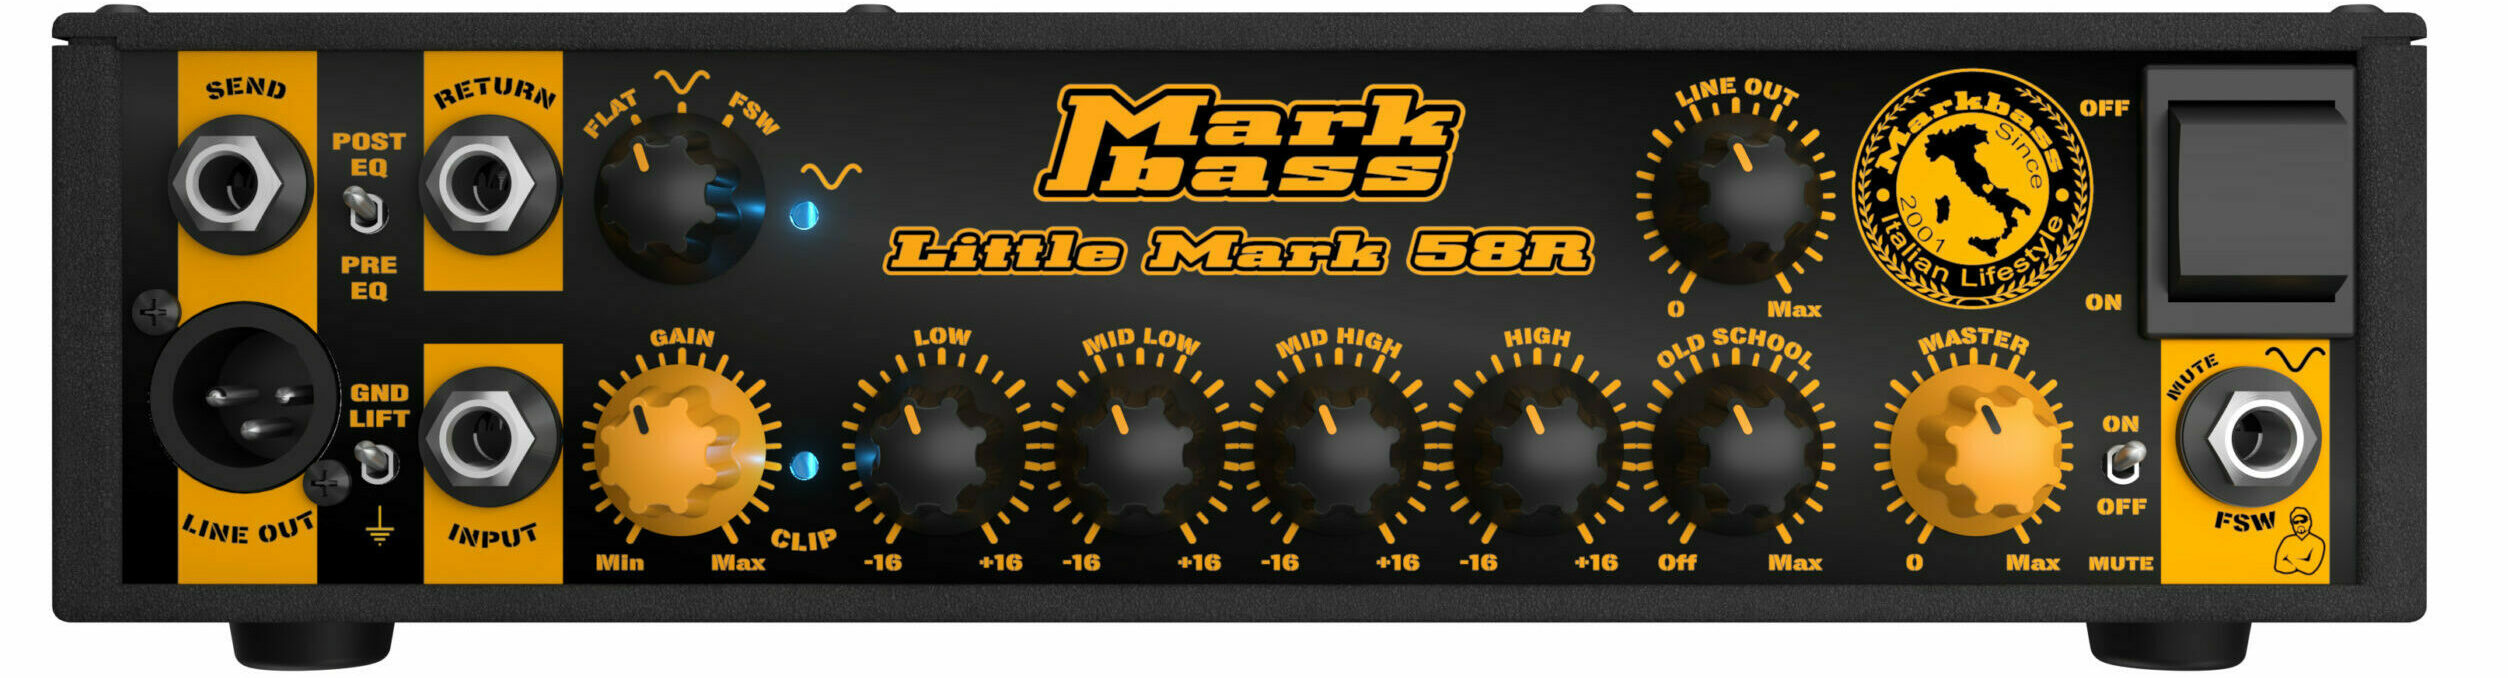 Markbass Little Mark 58r Head 500w - Cabezal para bajo - Variation 1